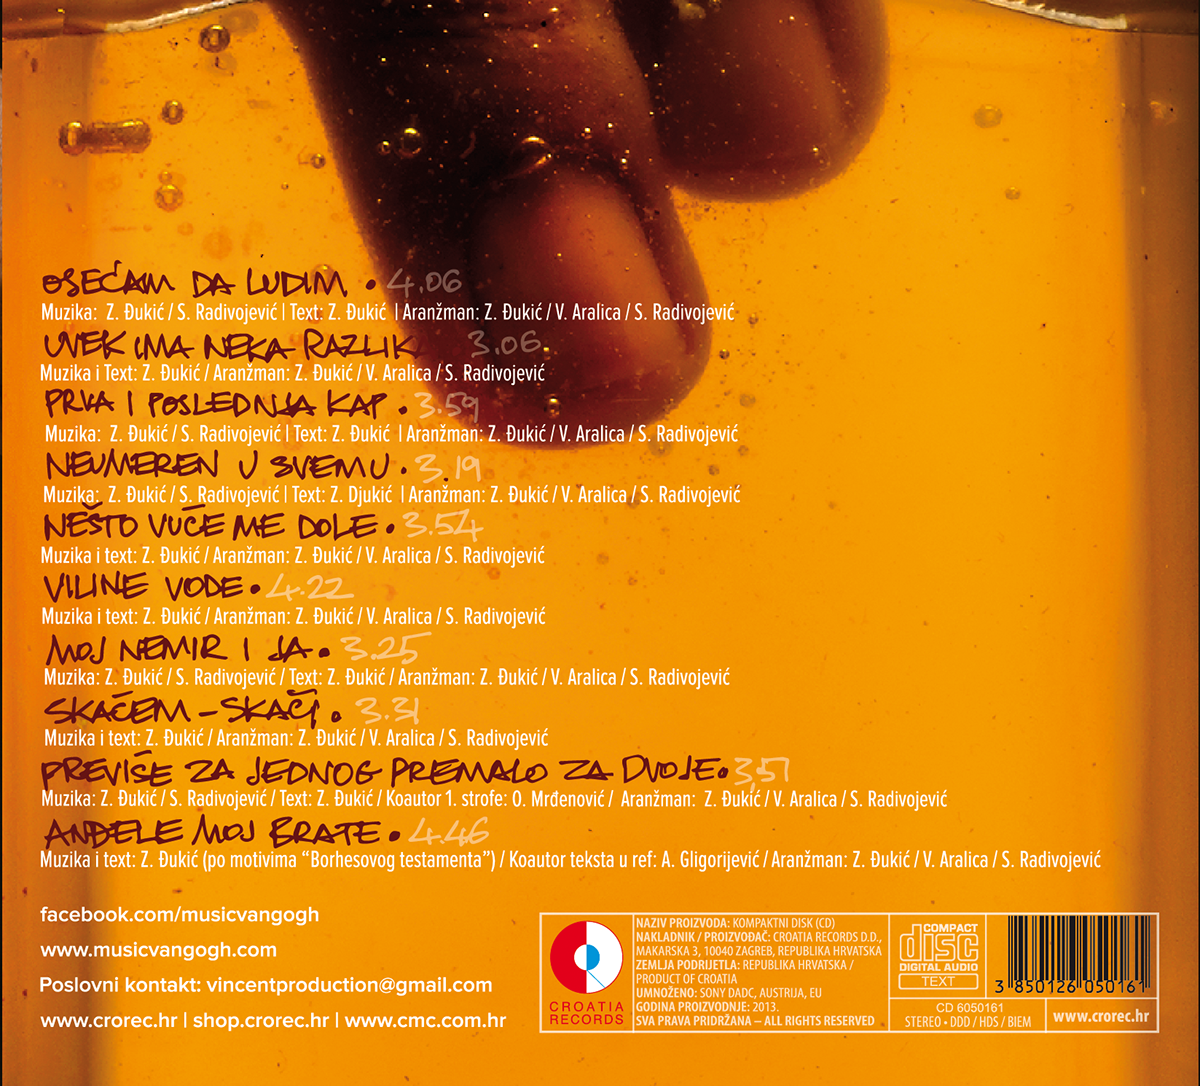 cd cover Serbia van gogh Album